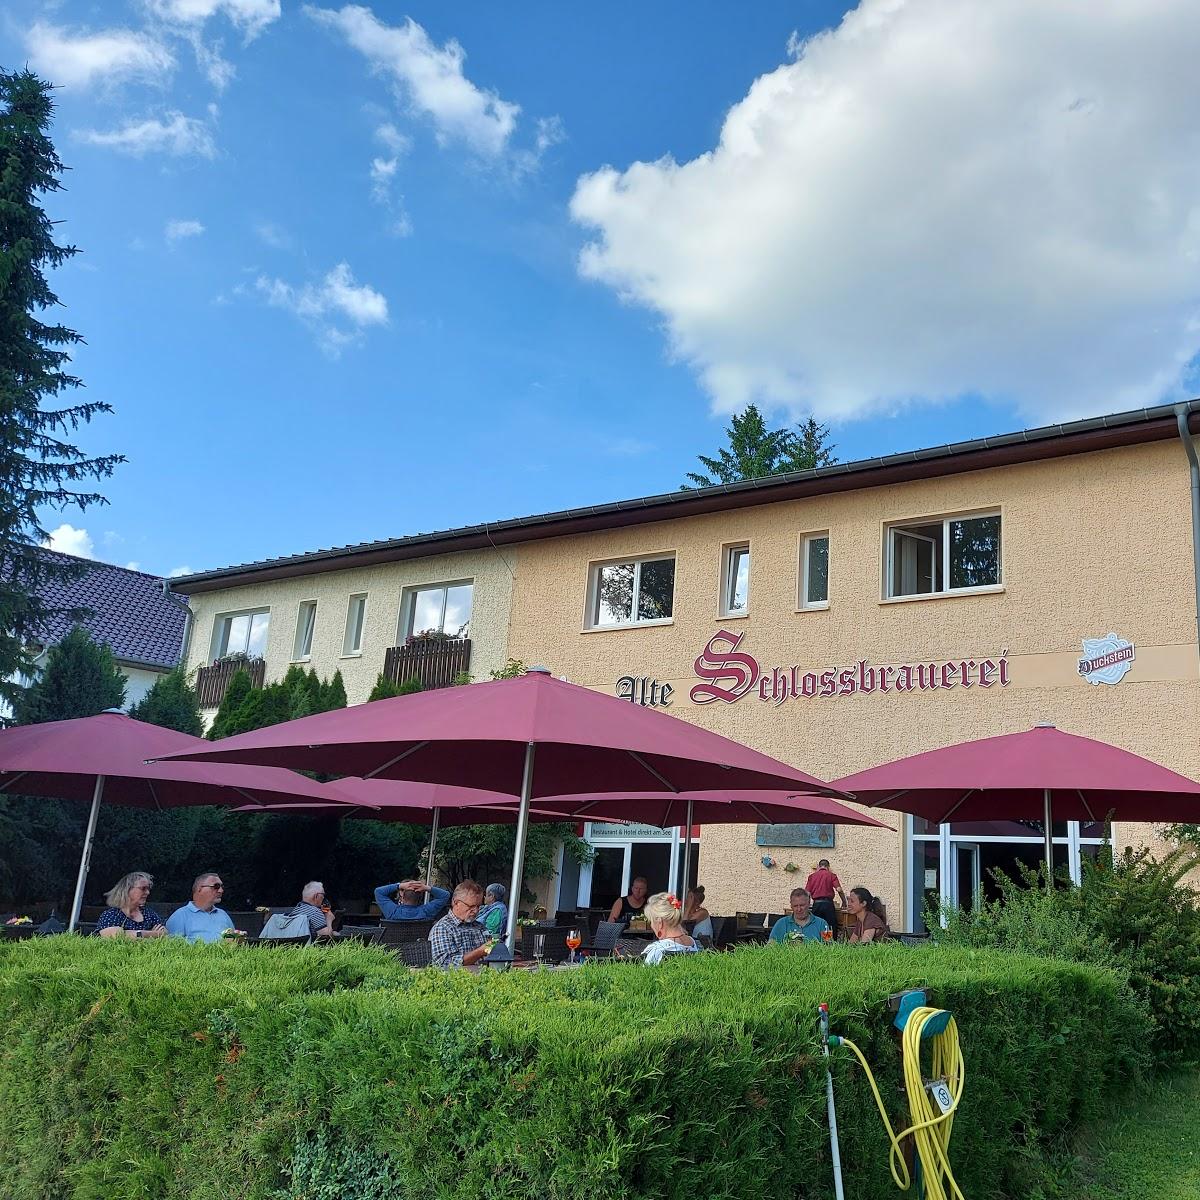 Restaurant "Alte Schlossbrauerei" in Mirow